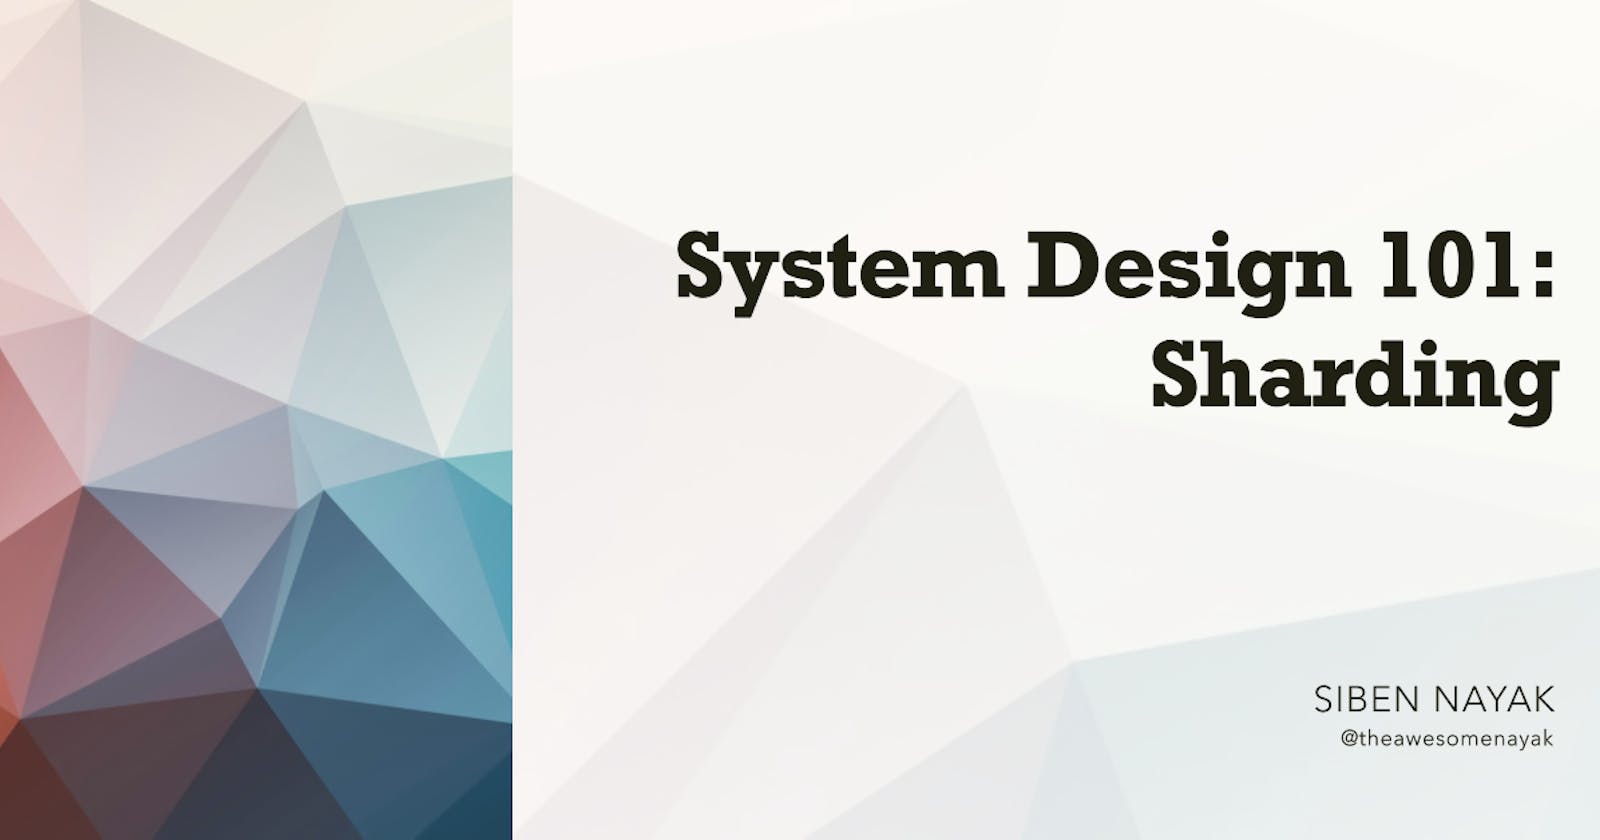 System Design 101 - Sharding